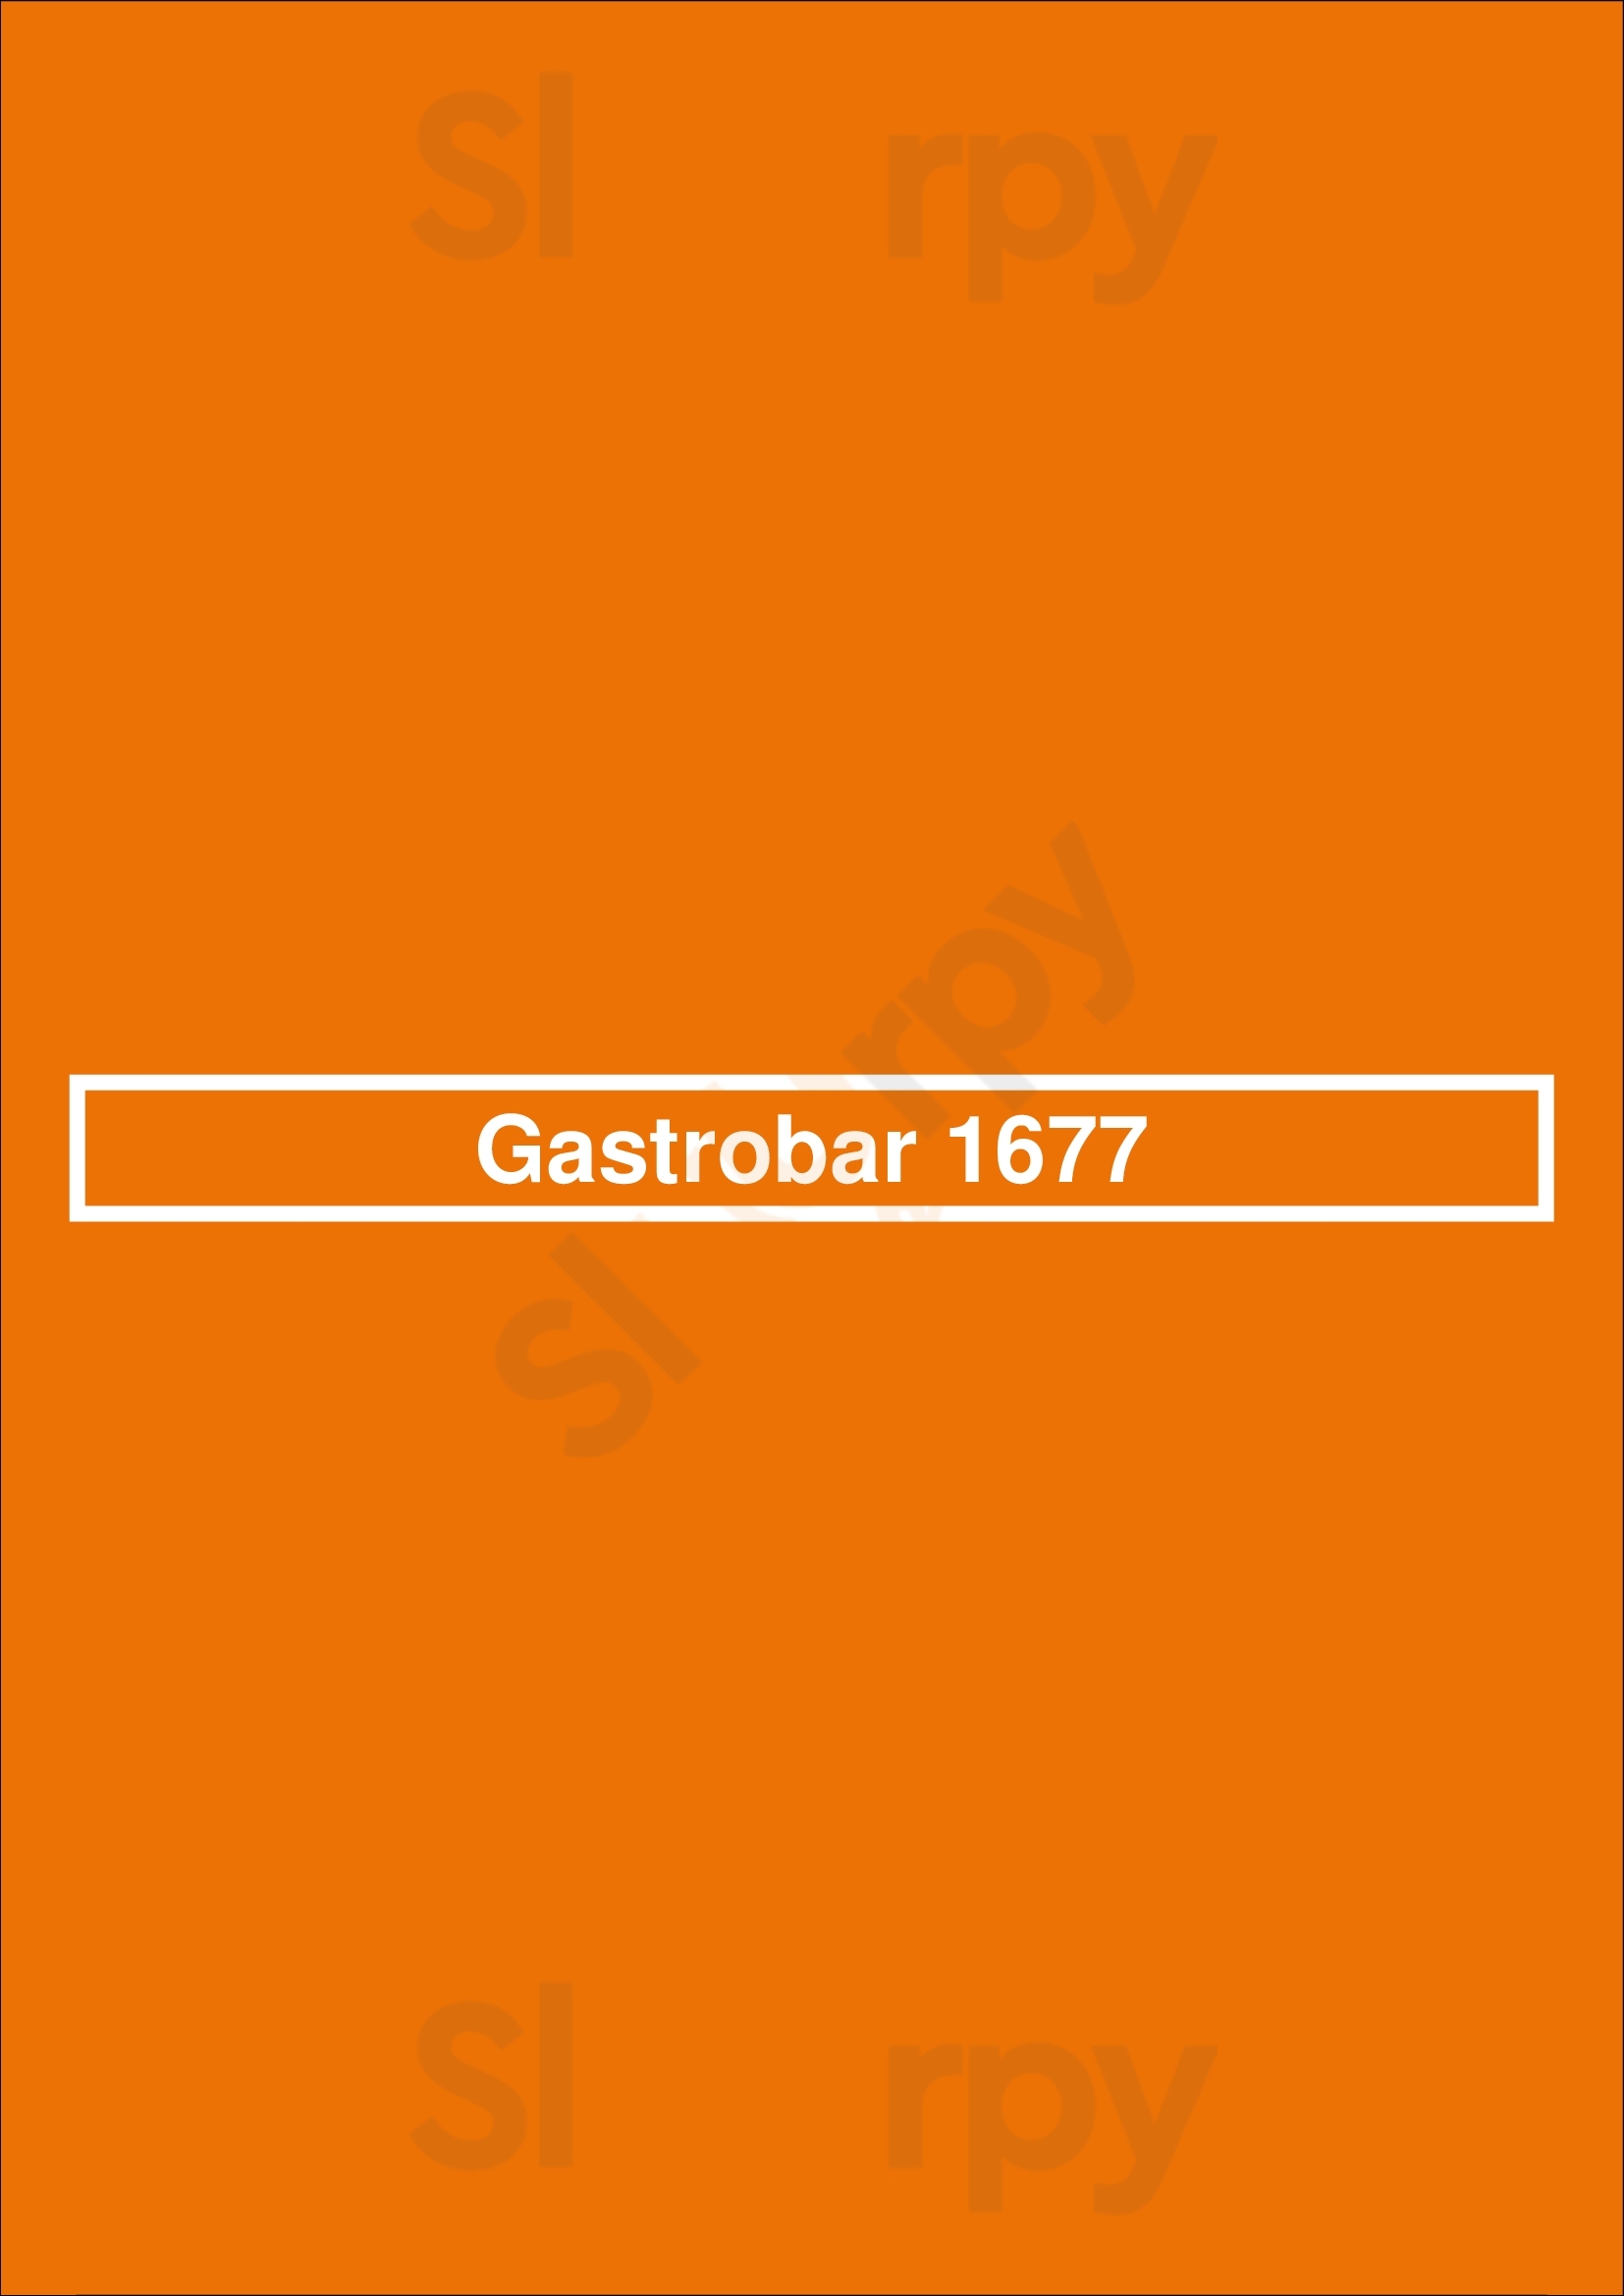 Gastrobar 1677 Sittard Menu - 1